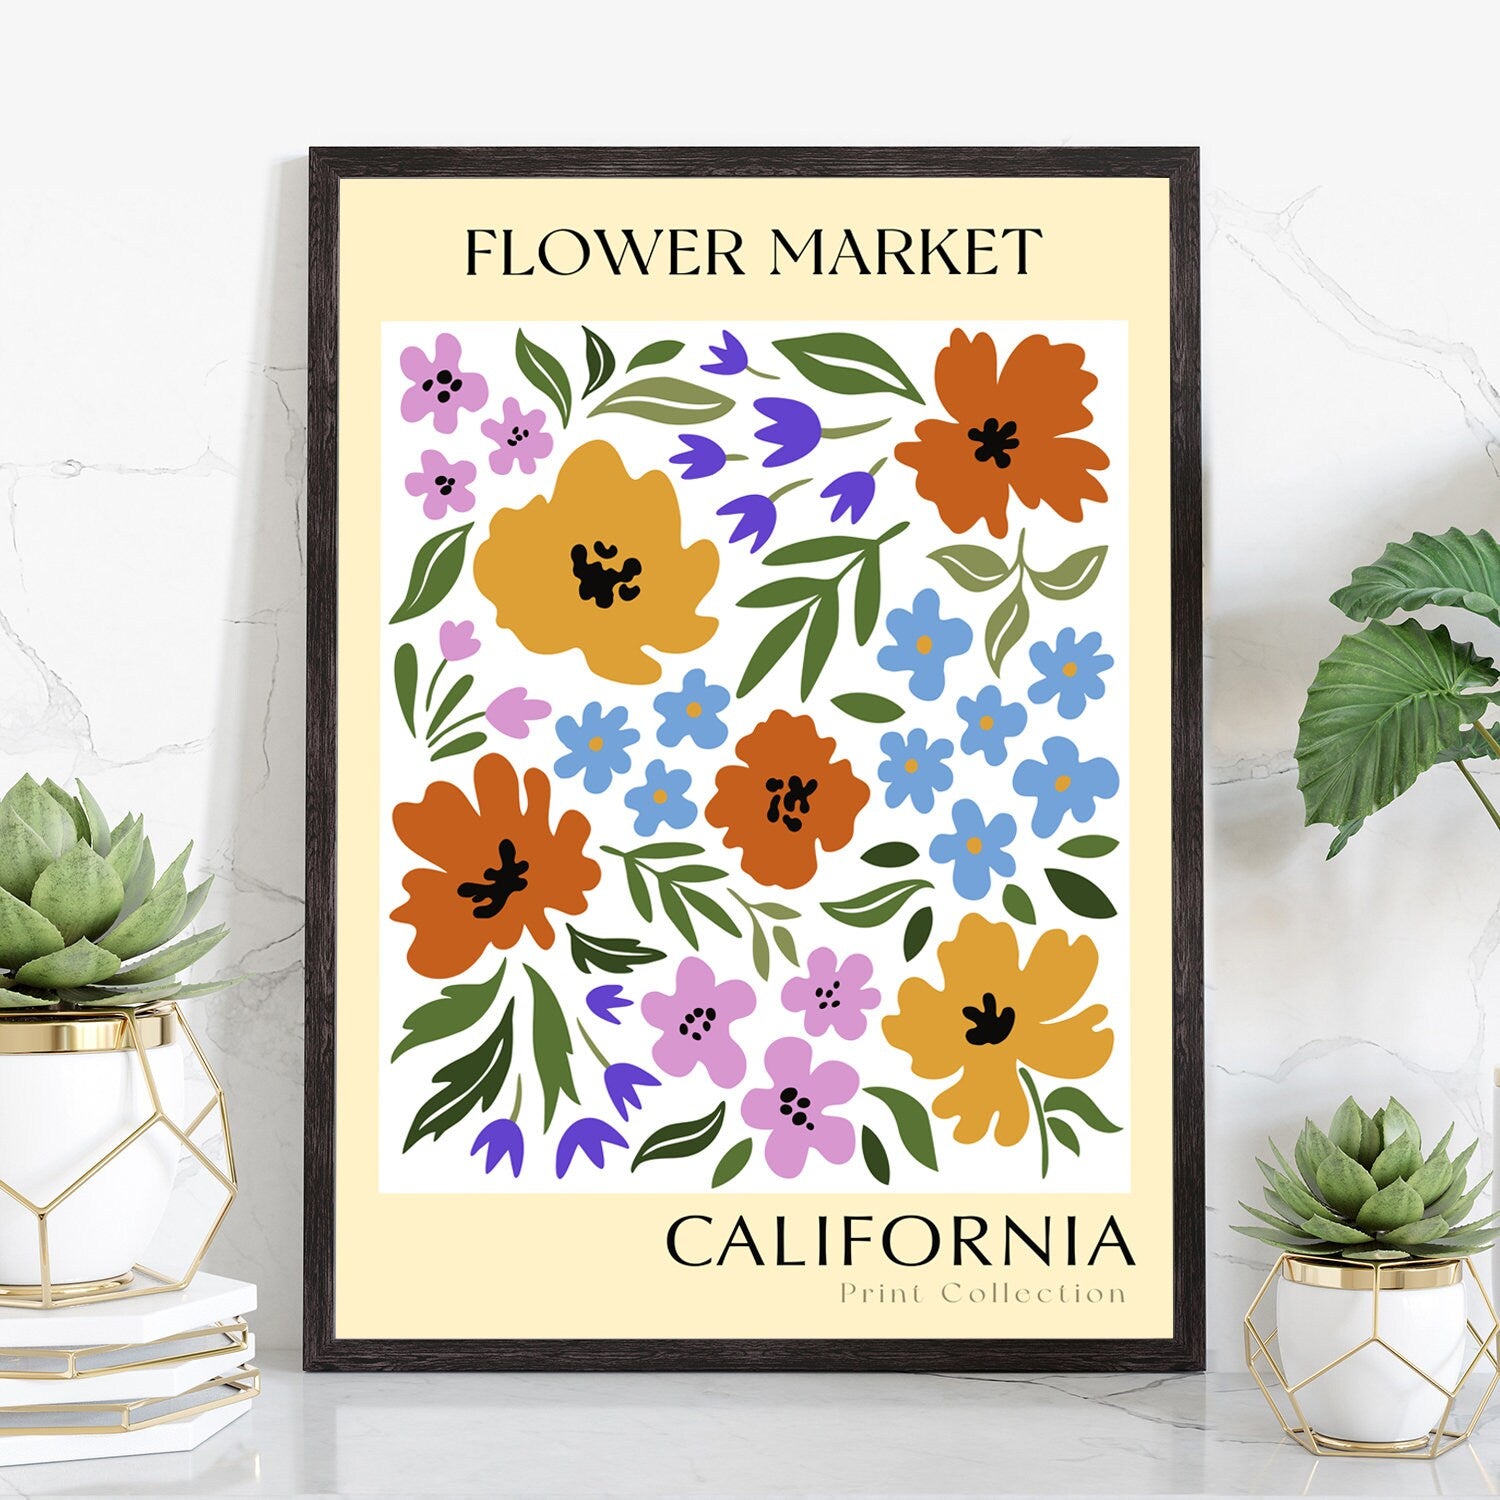 California State flower print, Poster art, California flower market poster, Botanical poster, Natural poster artwork, Boho floral wall art